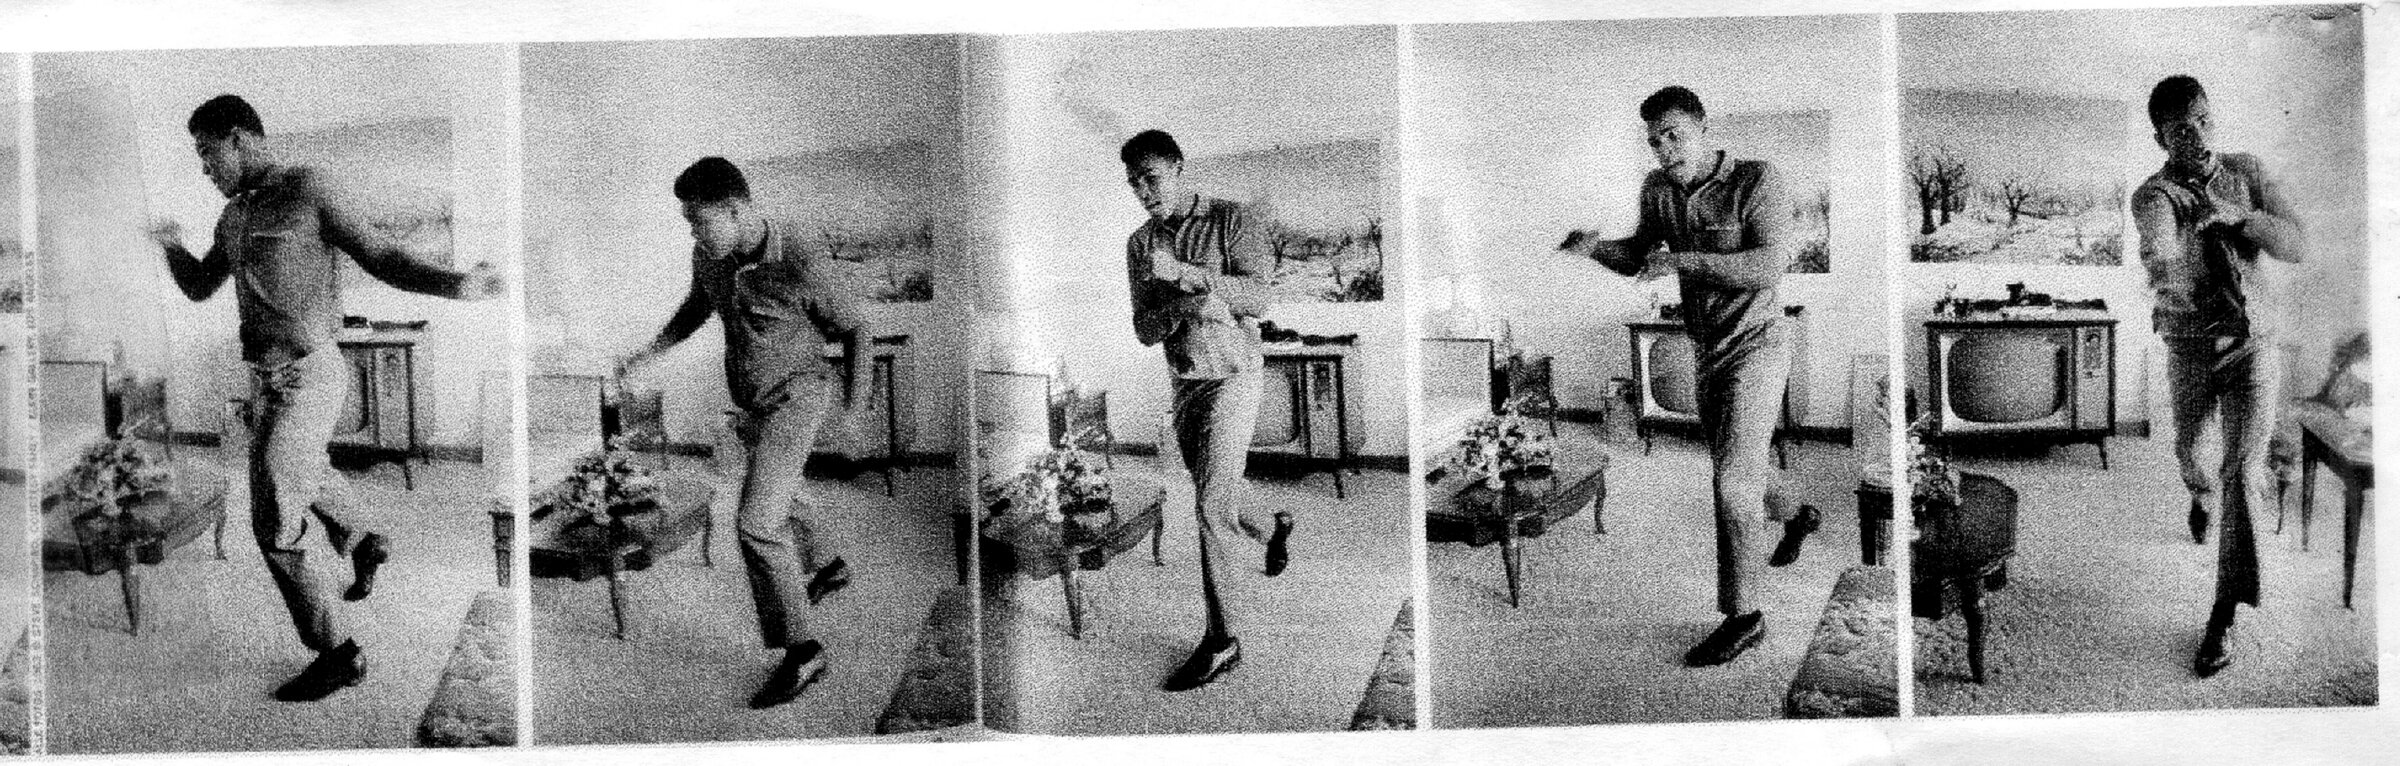 Steve Shapiro, Ali Sequence, 1963, gelatin print